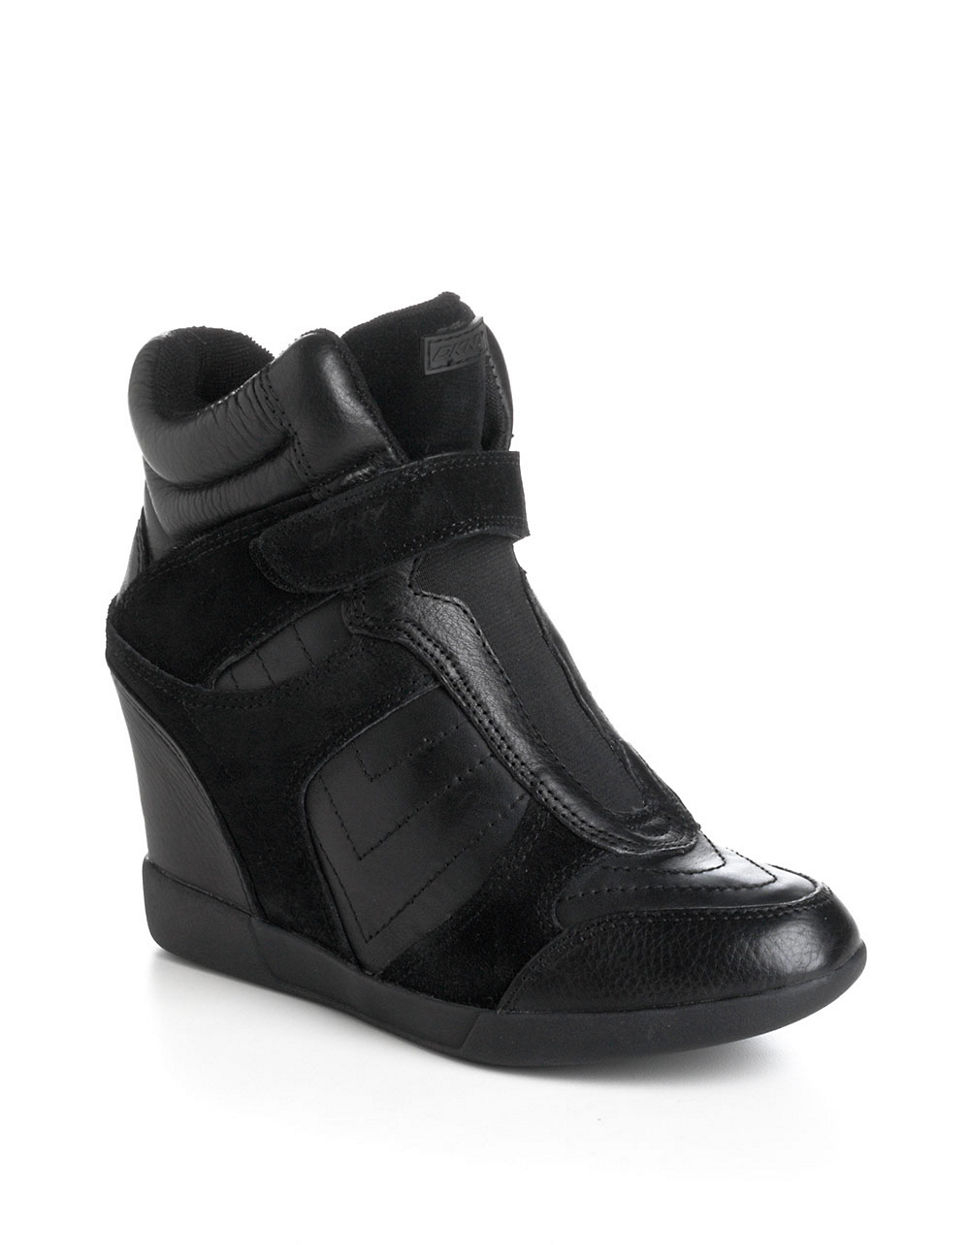 Dkny Heath Leather Wedge Sneakers in Black | Lyst